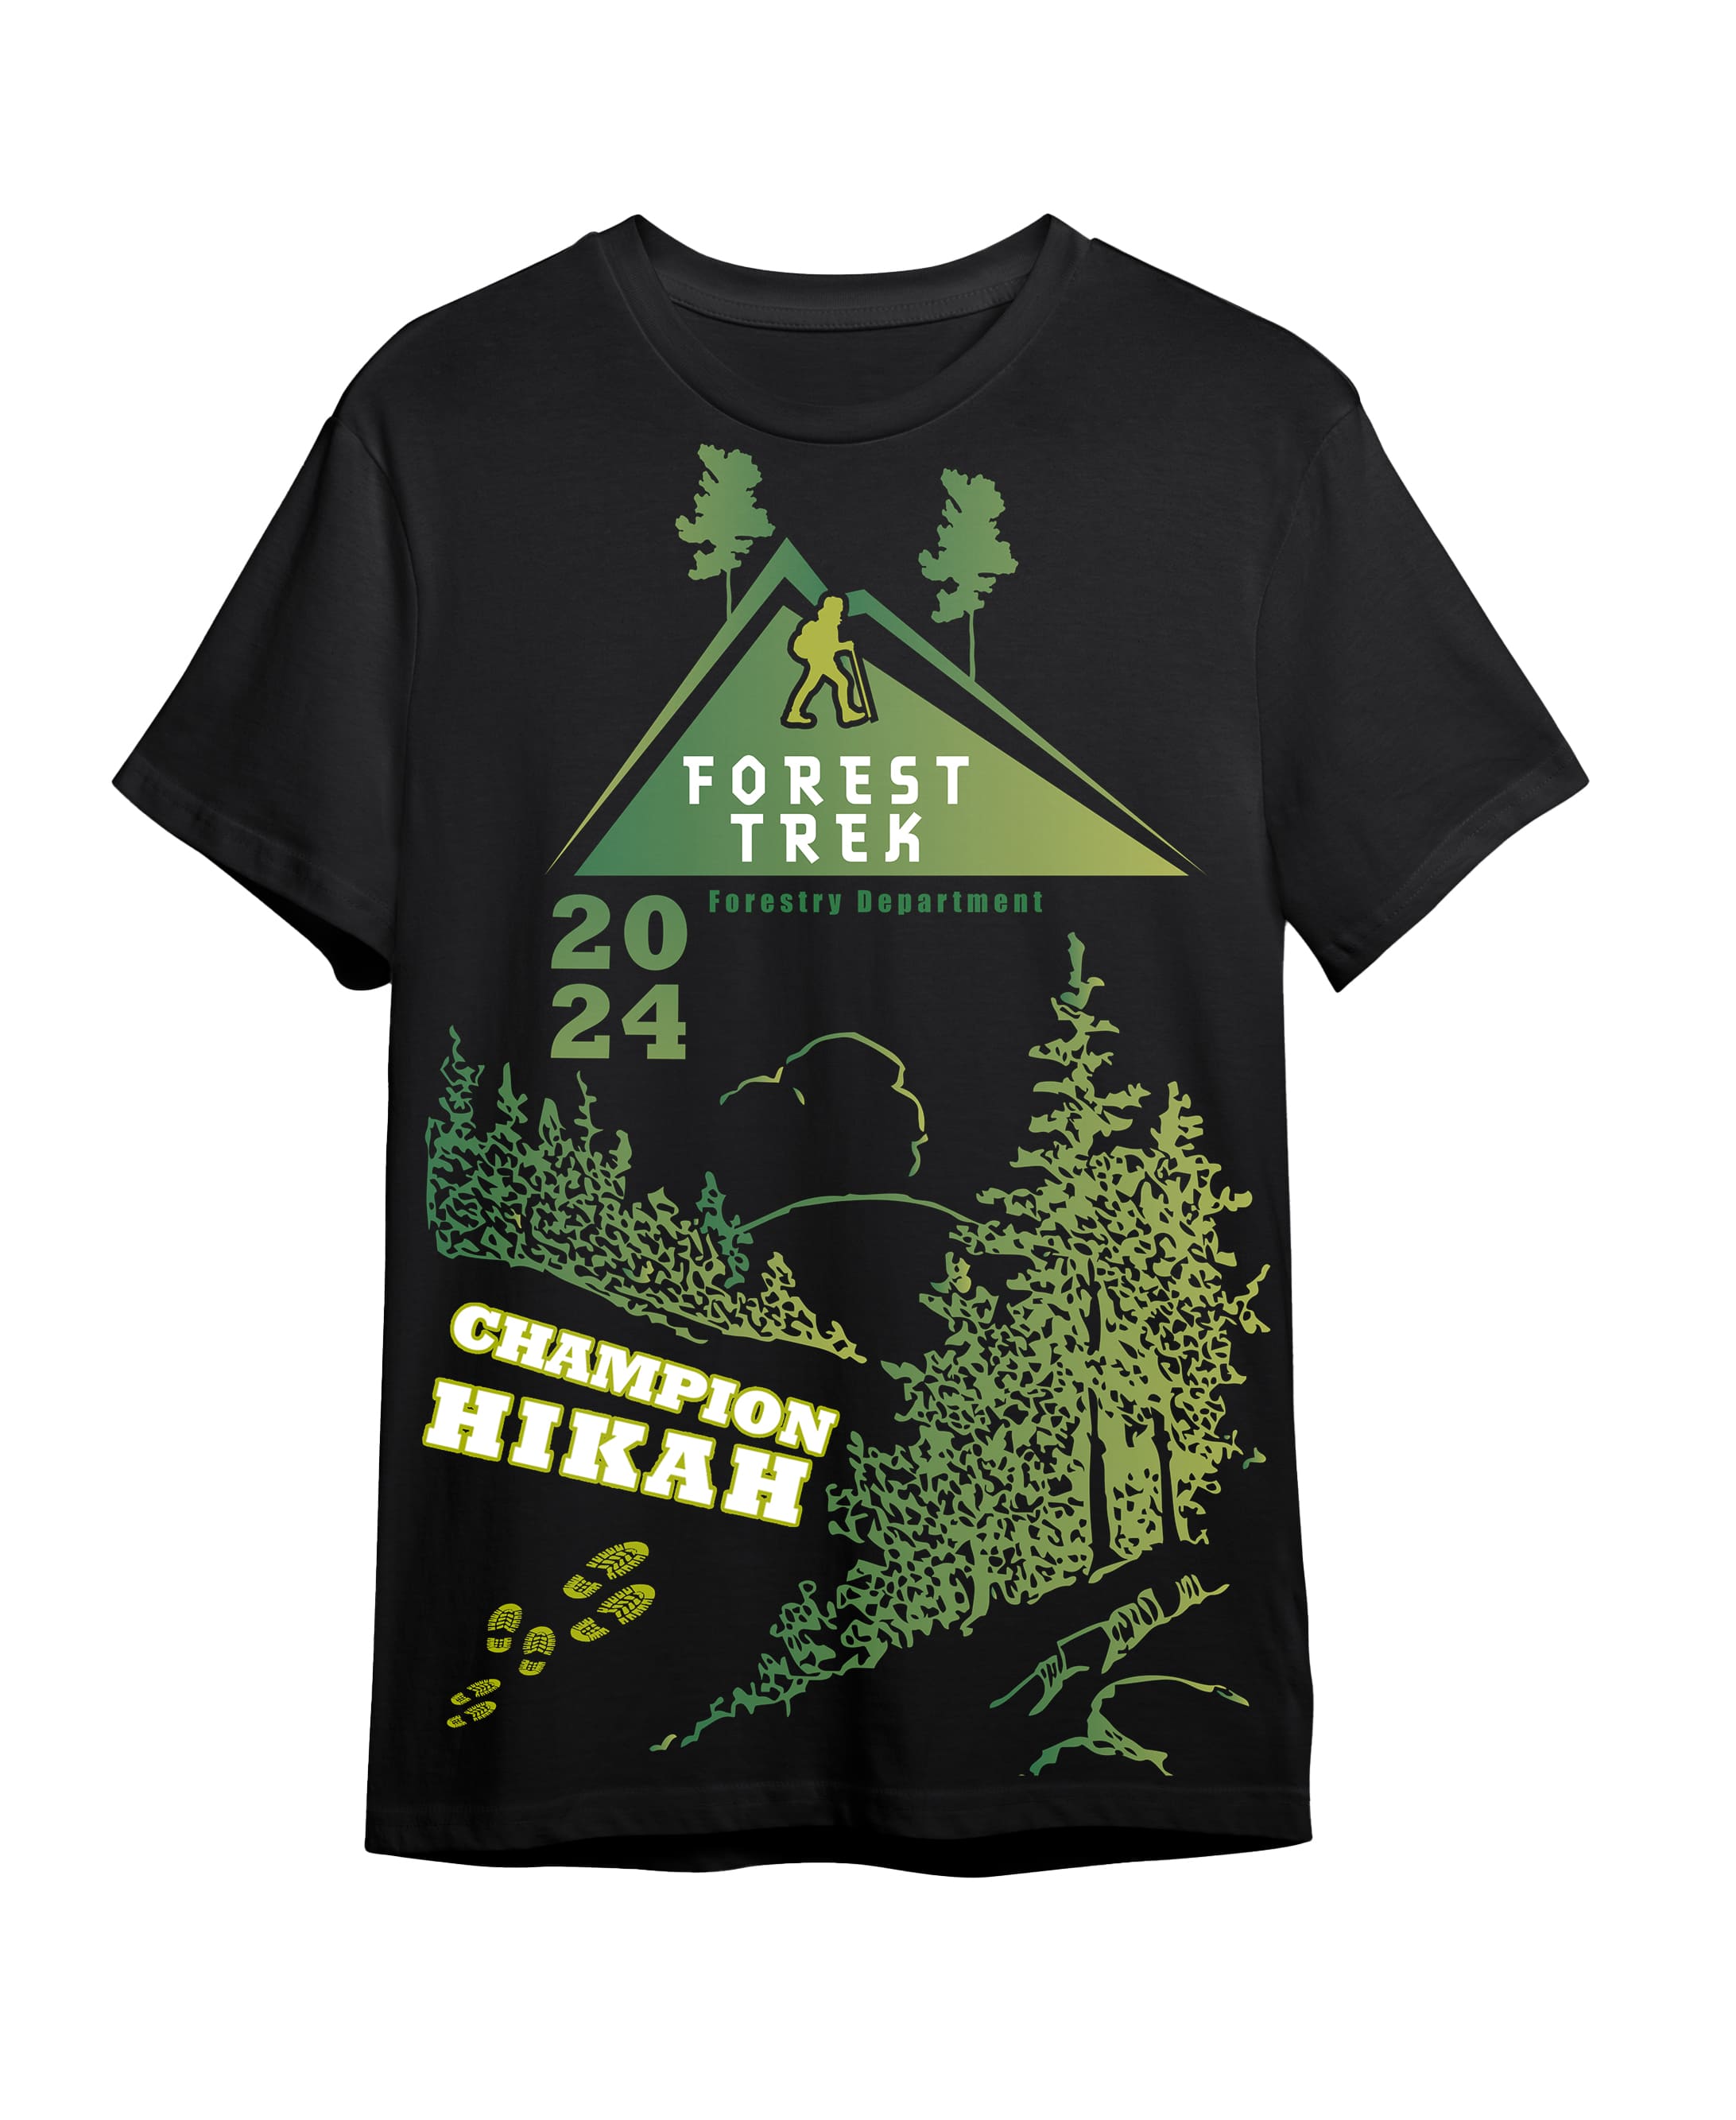 Forest Trek Champion Hikah - Adult Black